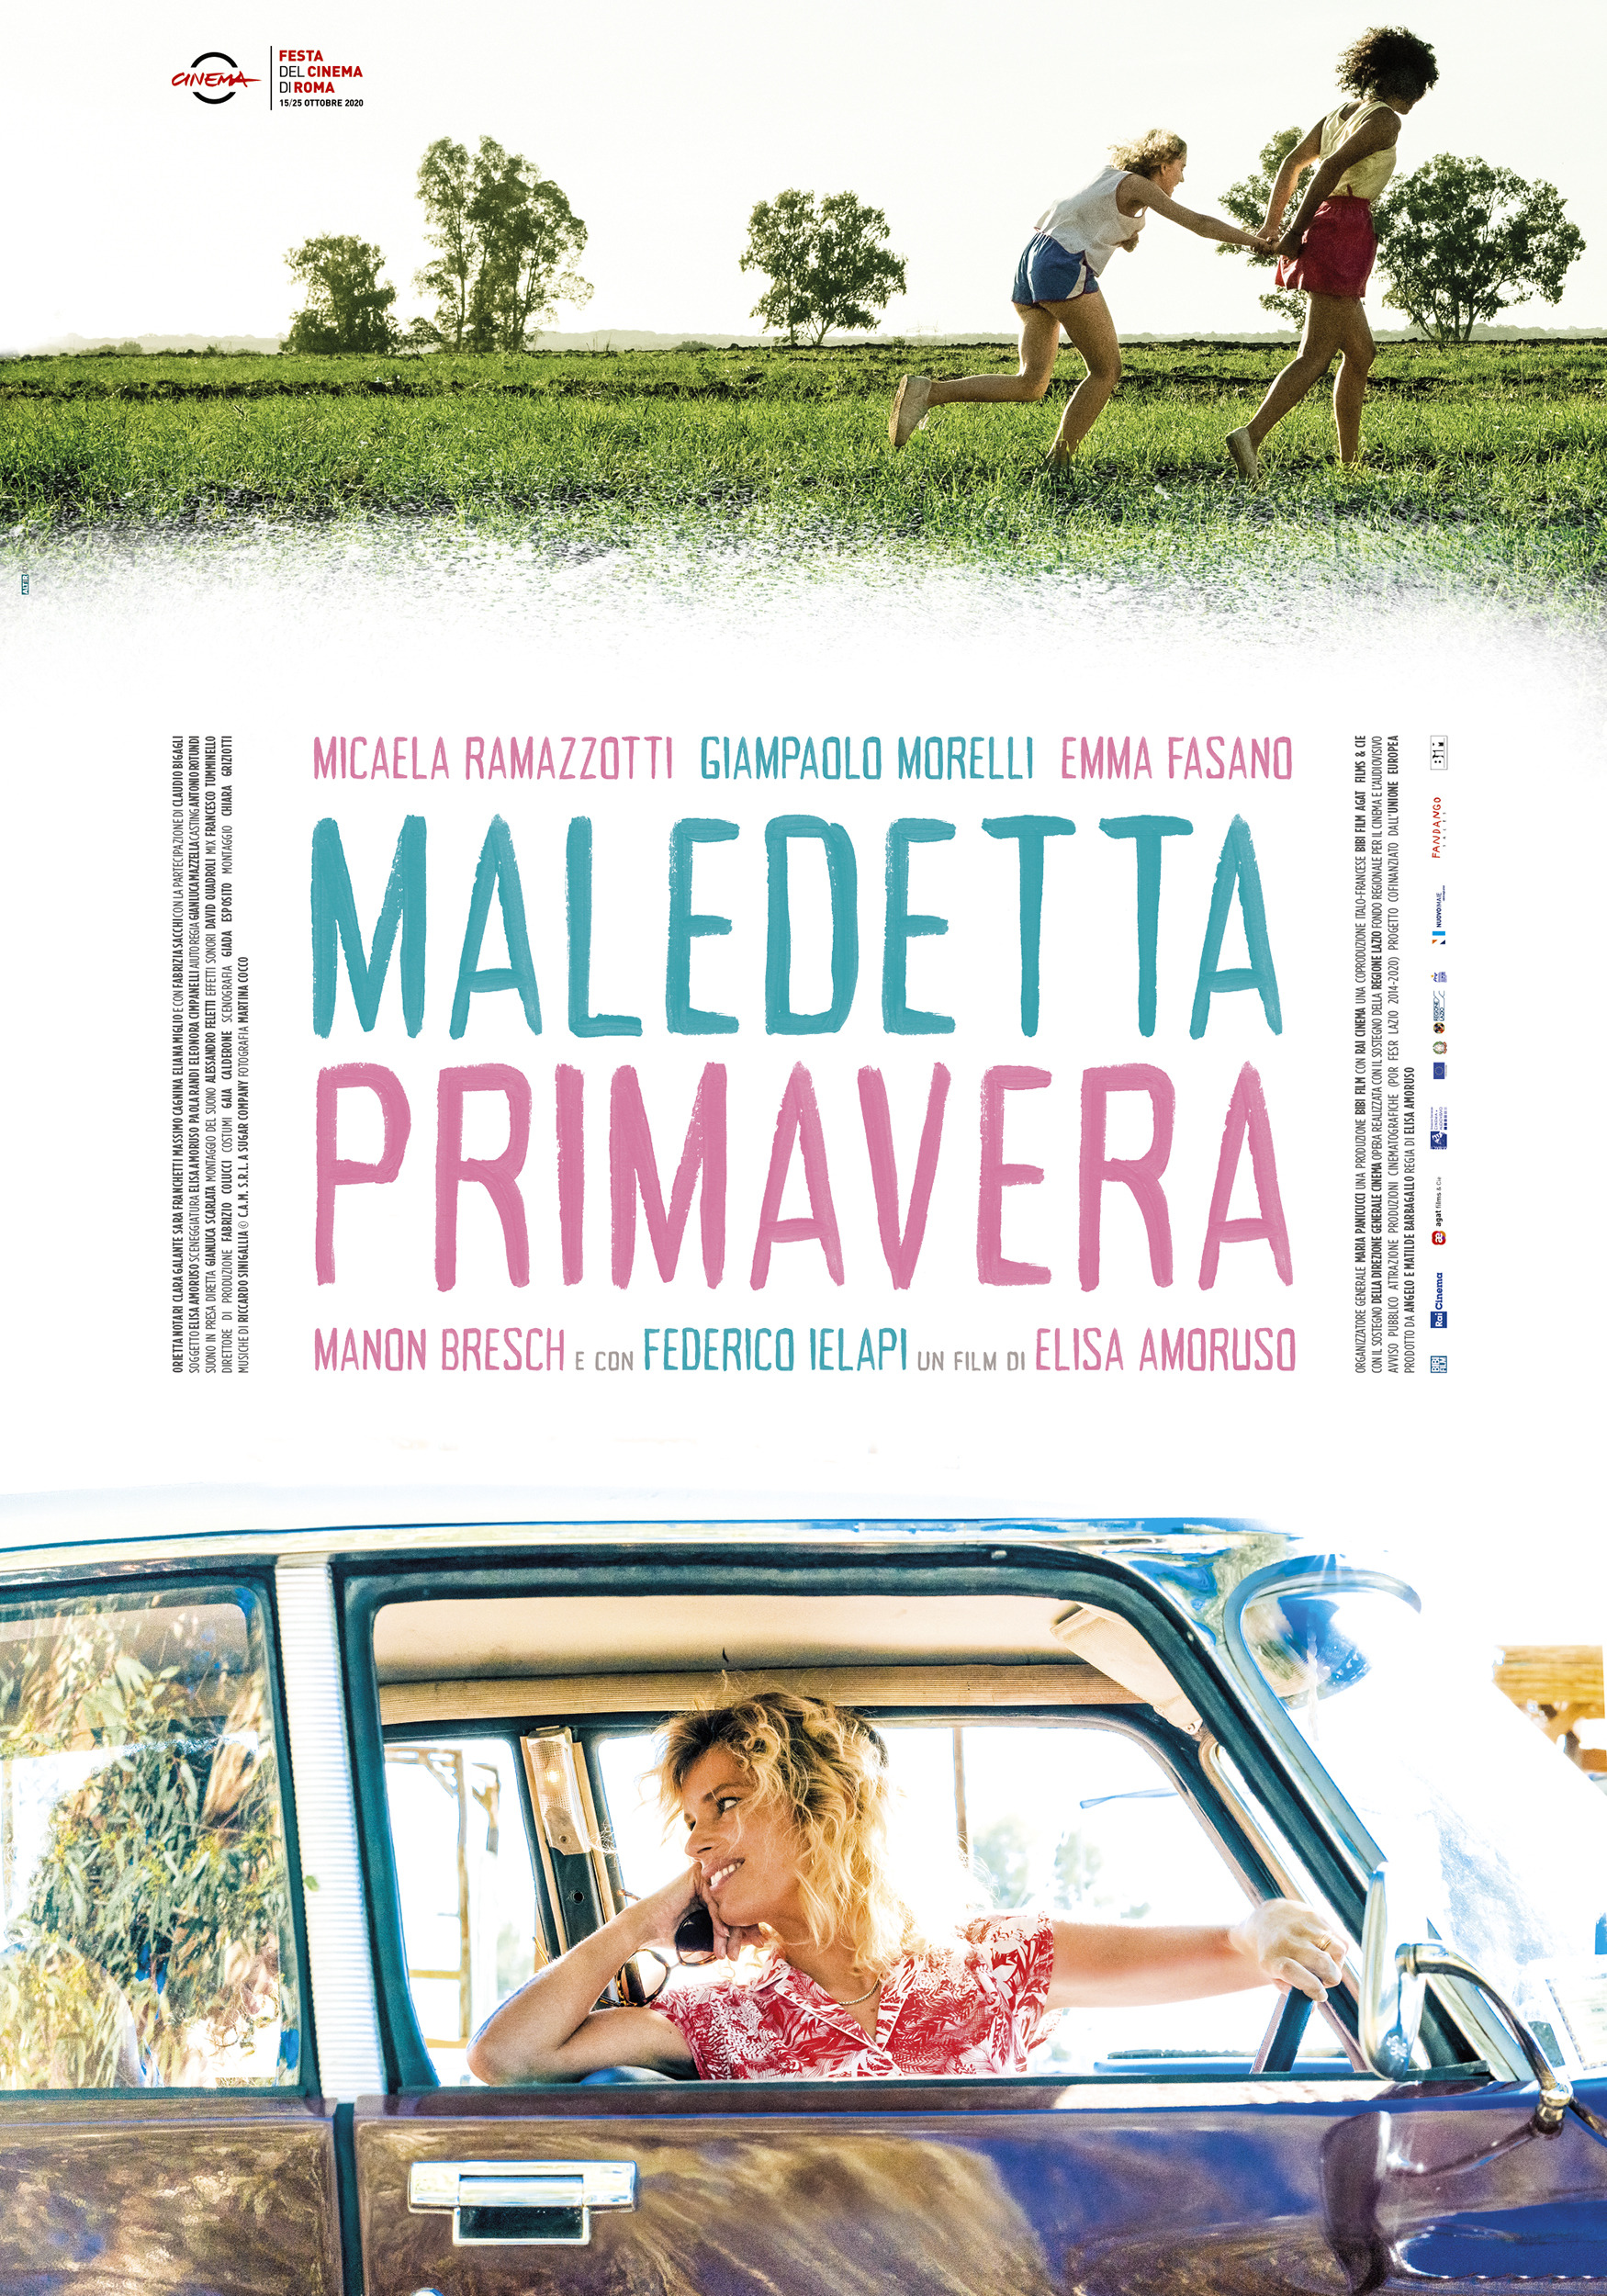 Mega Sized Movie Poster Image for Maledetta primavera 